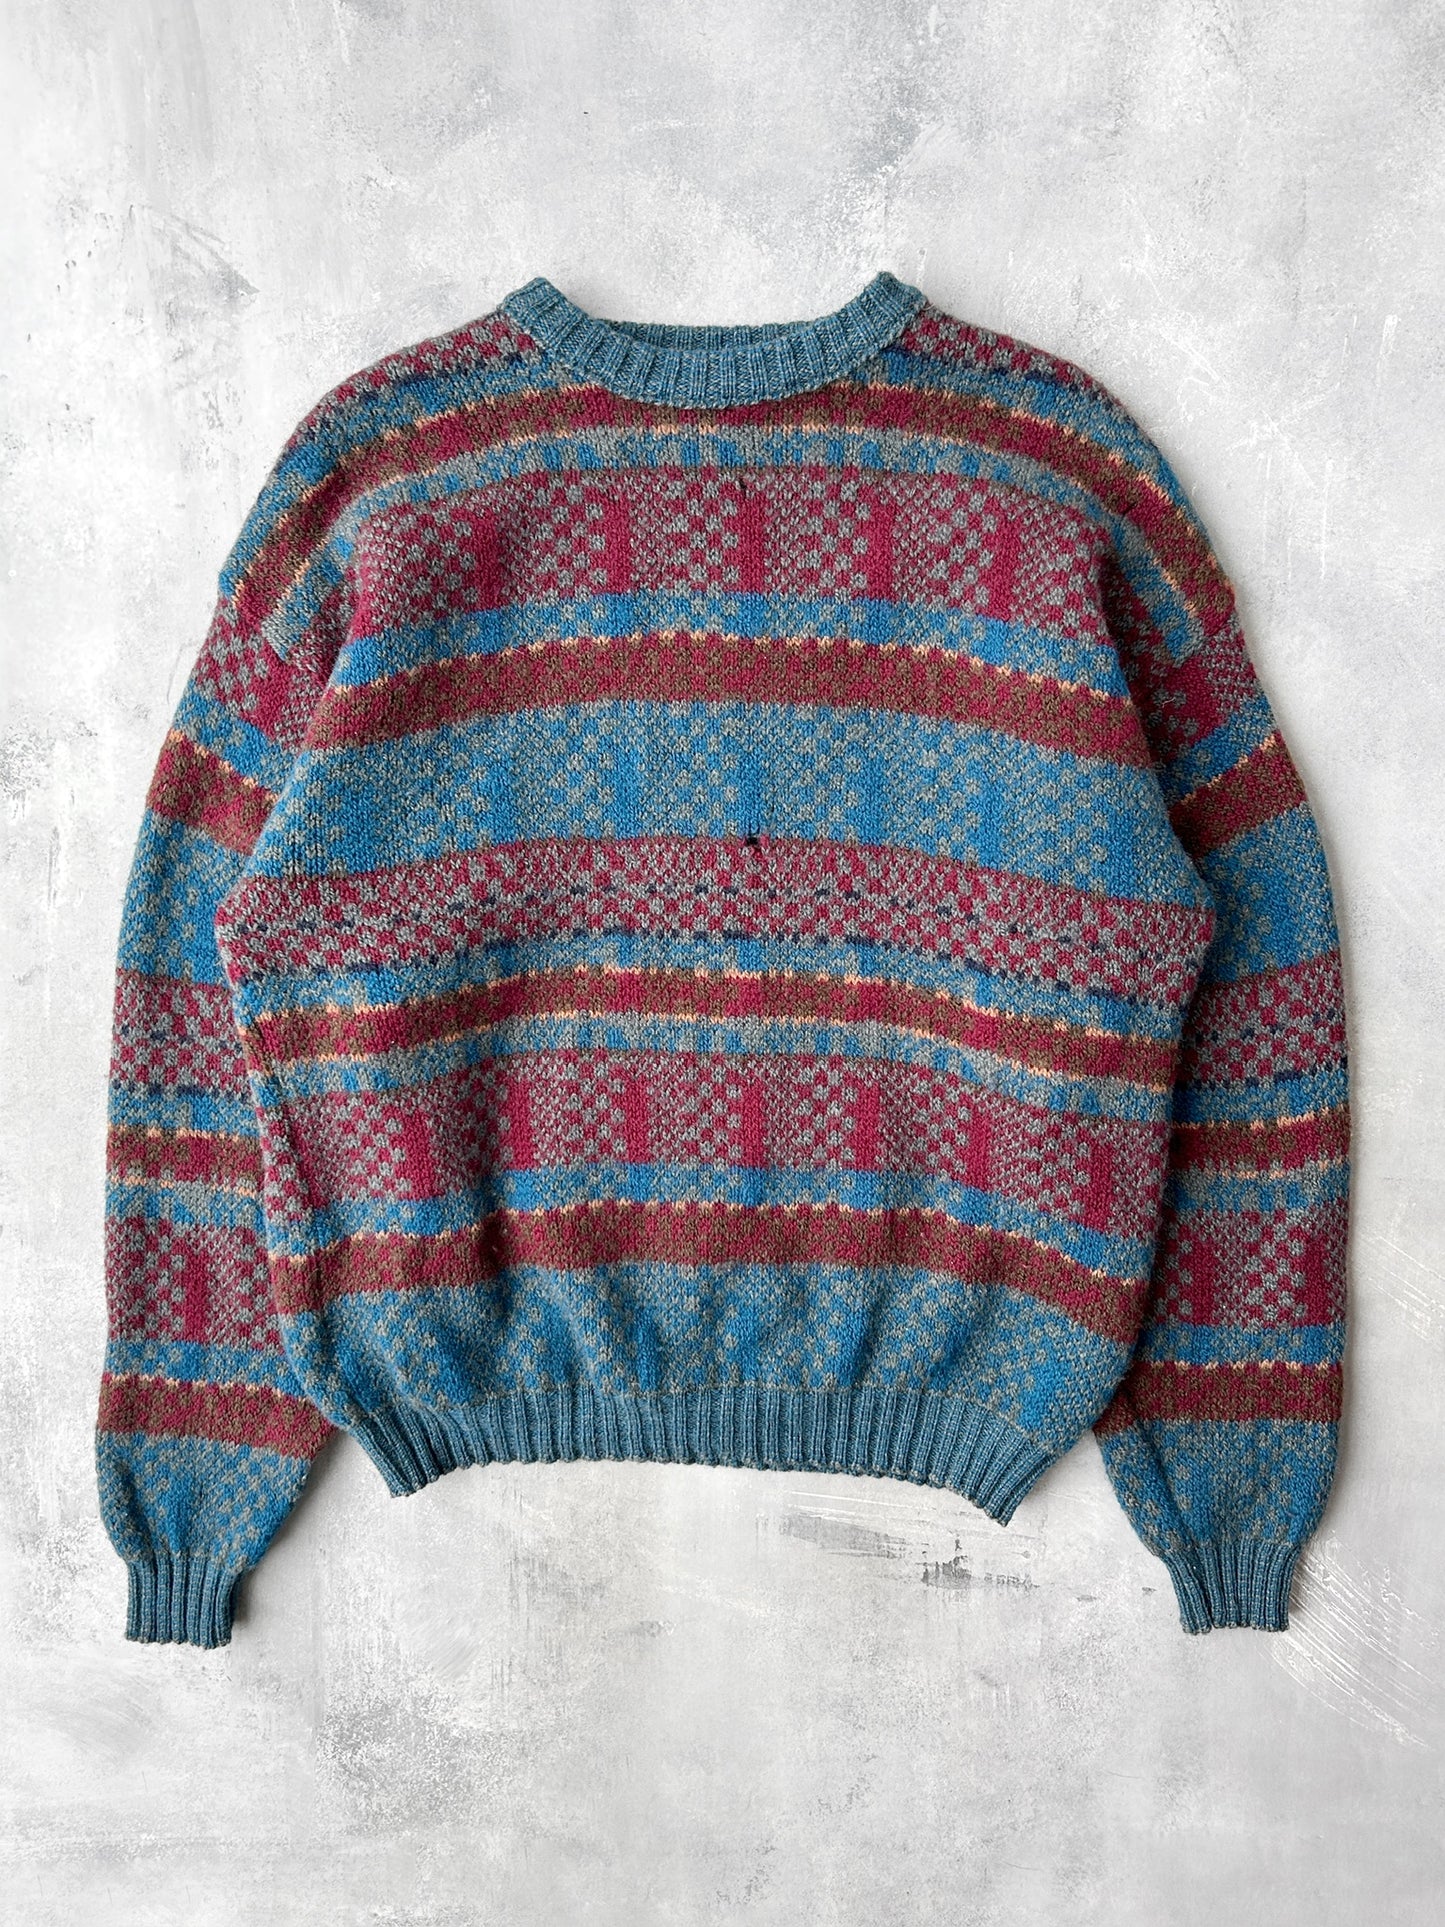 Pendleton Sweater 90's - XL